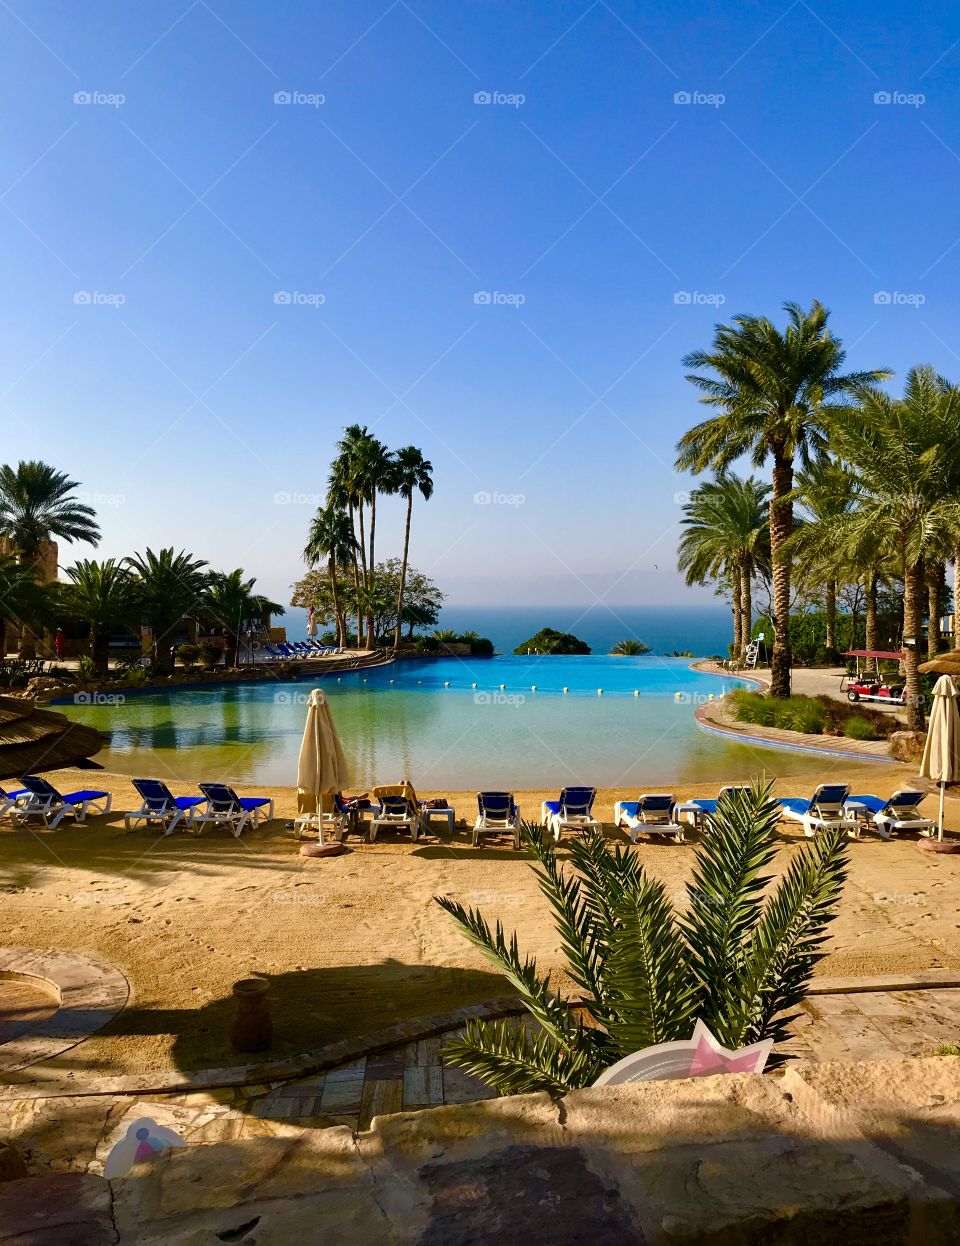 The Sea View from Movenpick Hotel at the Dead Sea Jordania